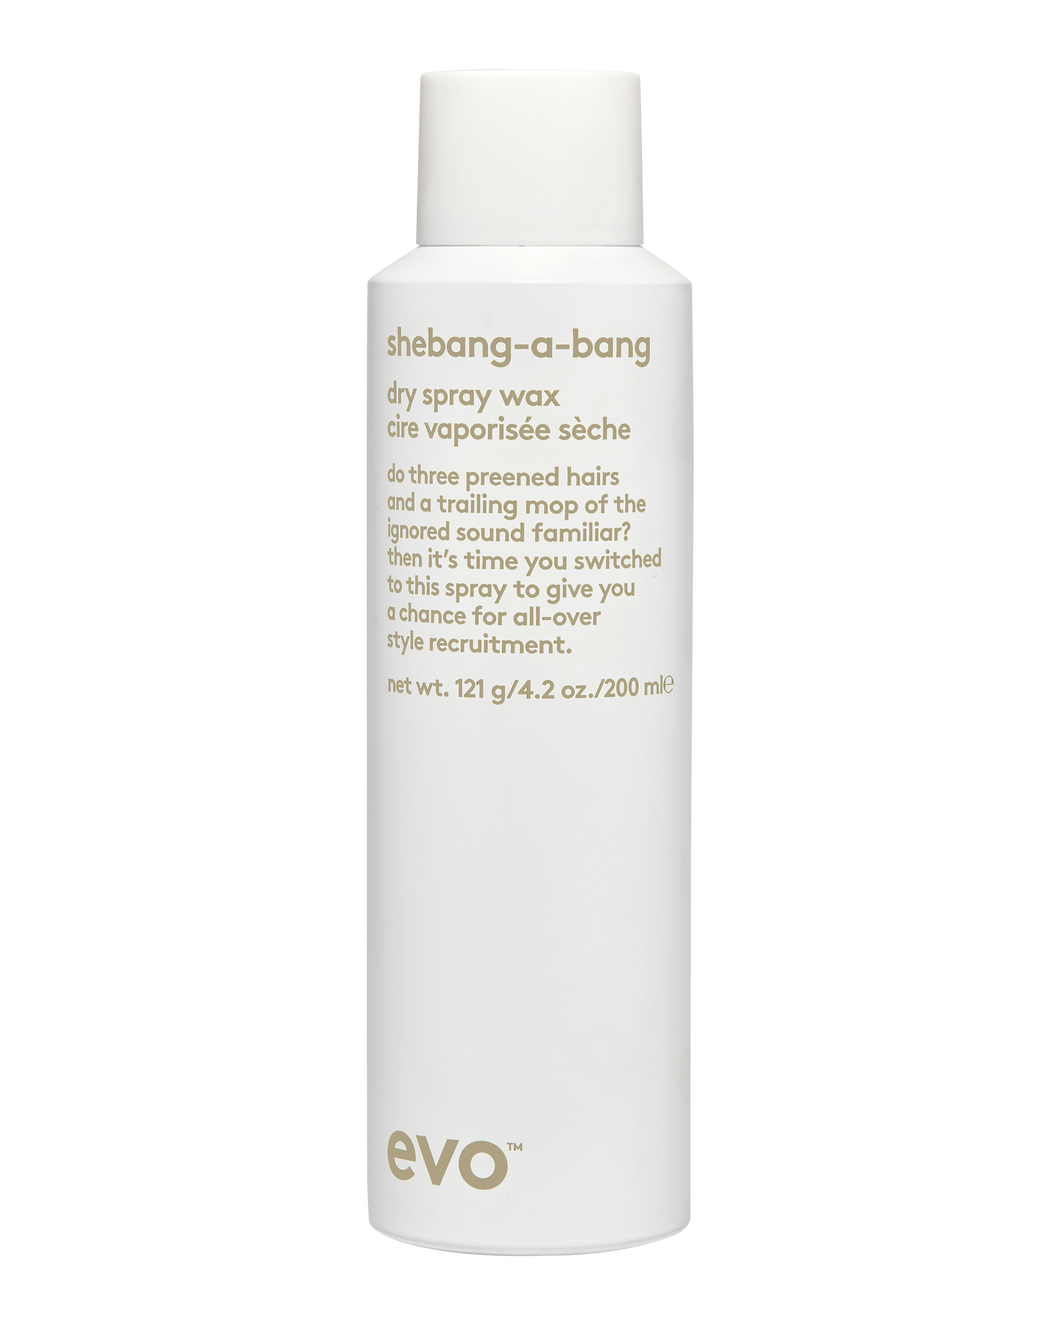 Evo Shebang-a-bang Dry Spray Wax 121g